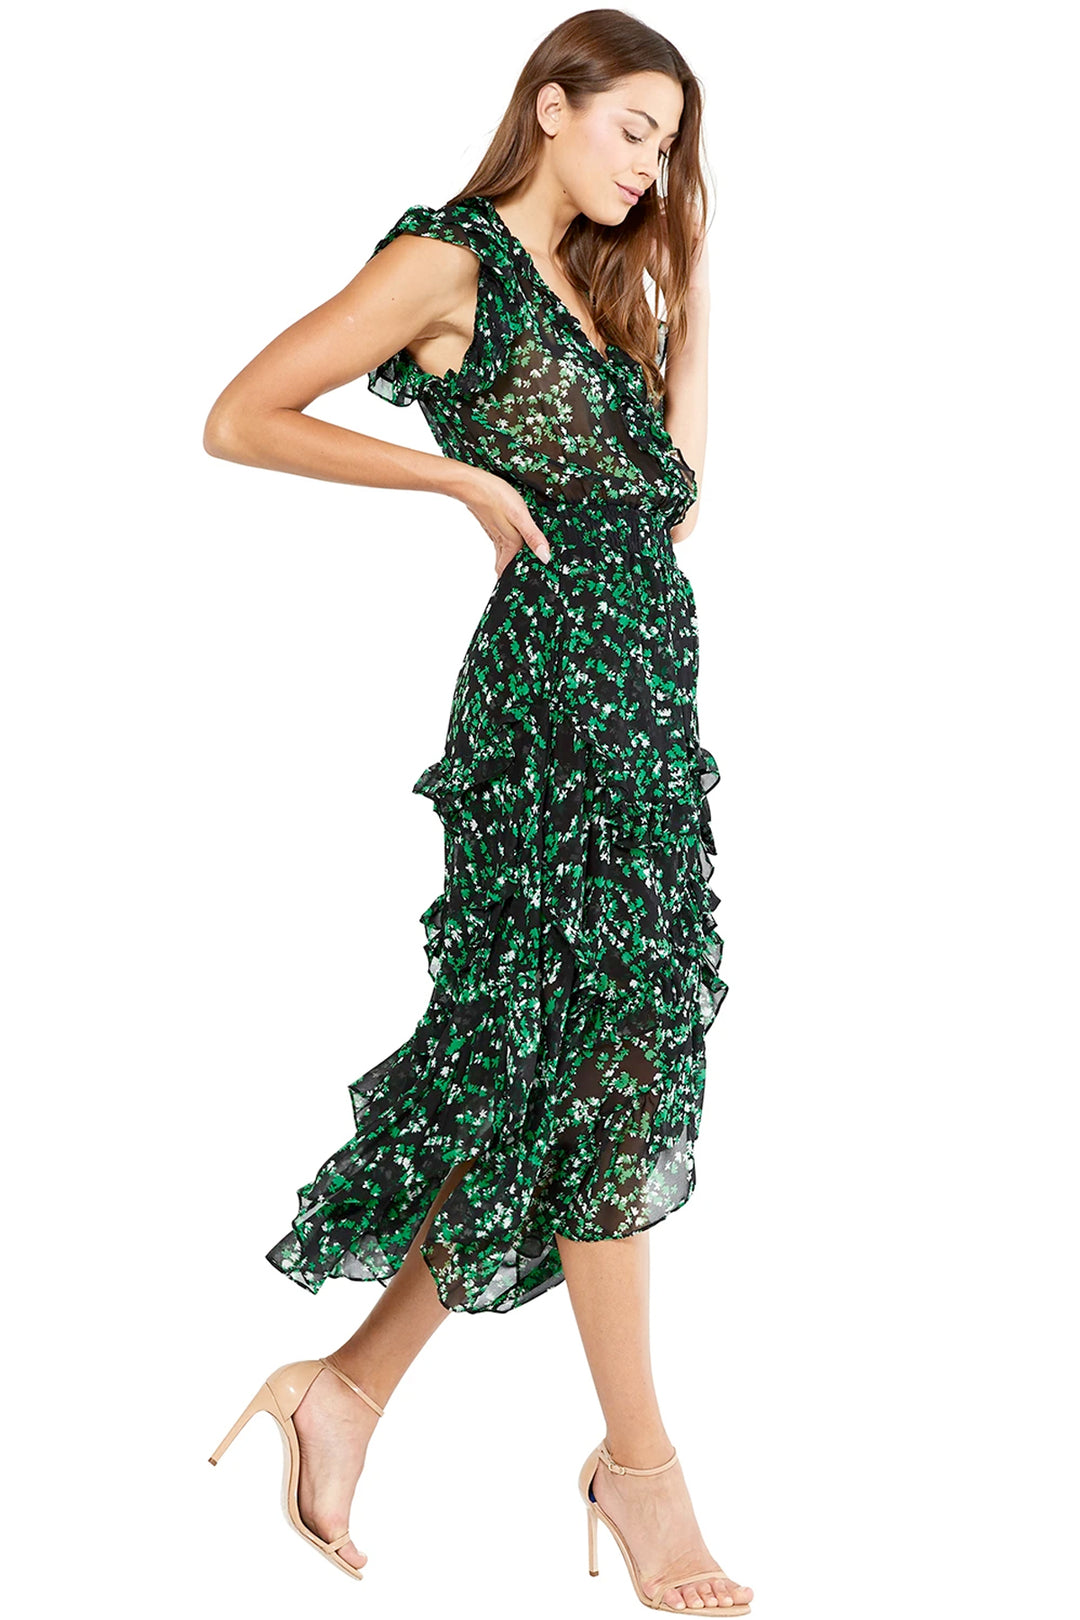 MISA - Dakota Dress in Green Mini Blooms